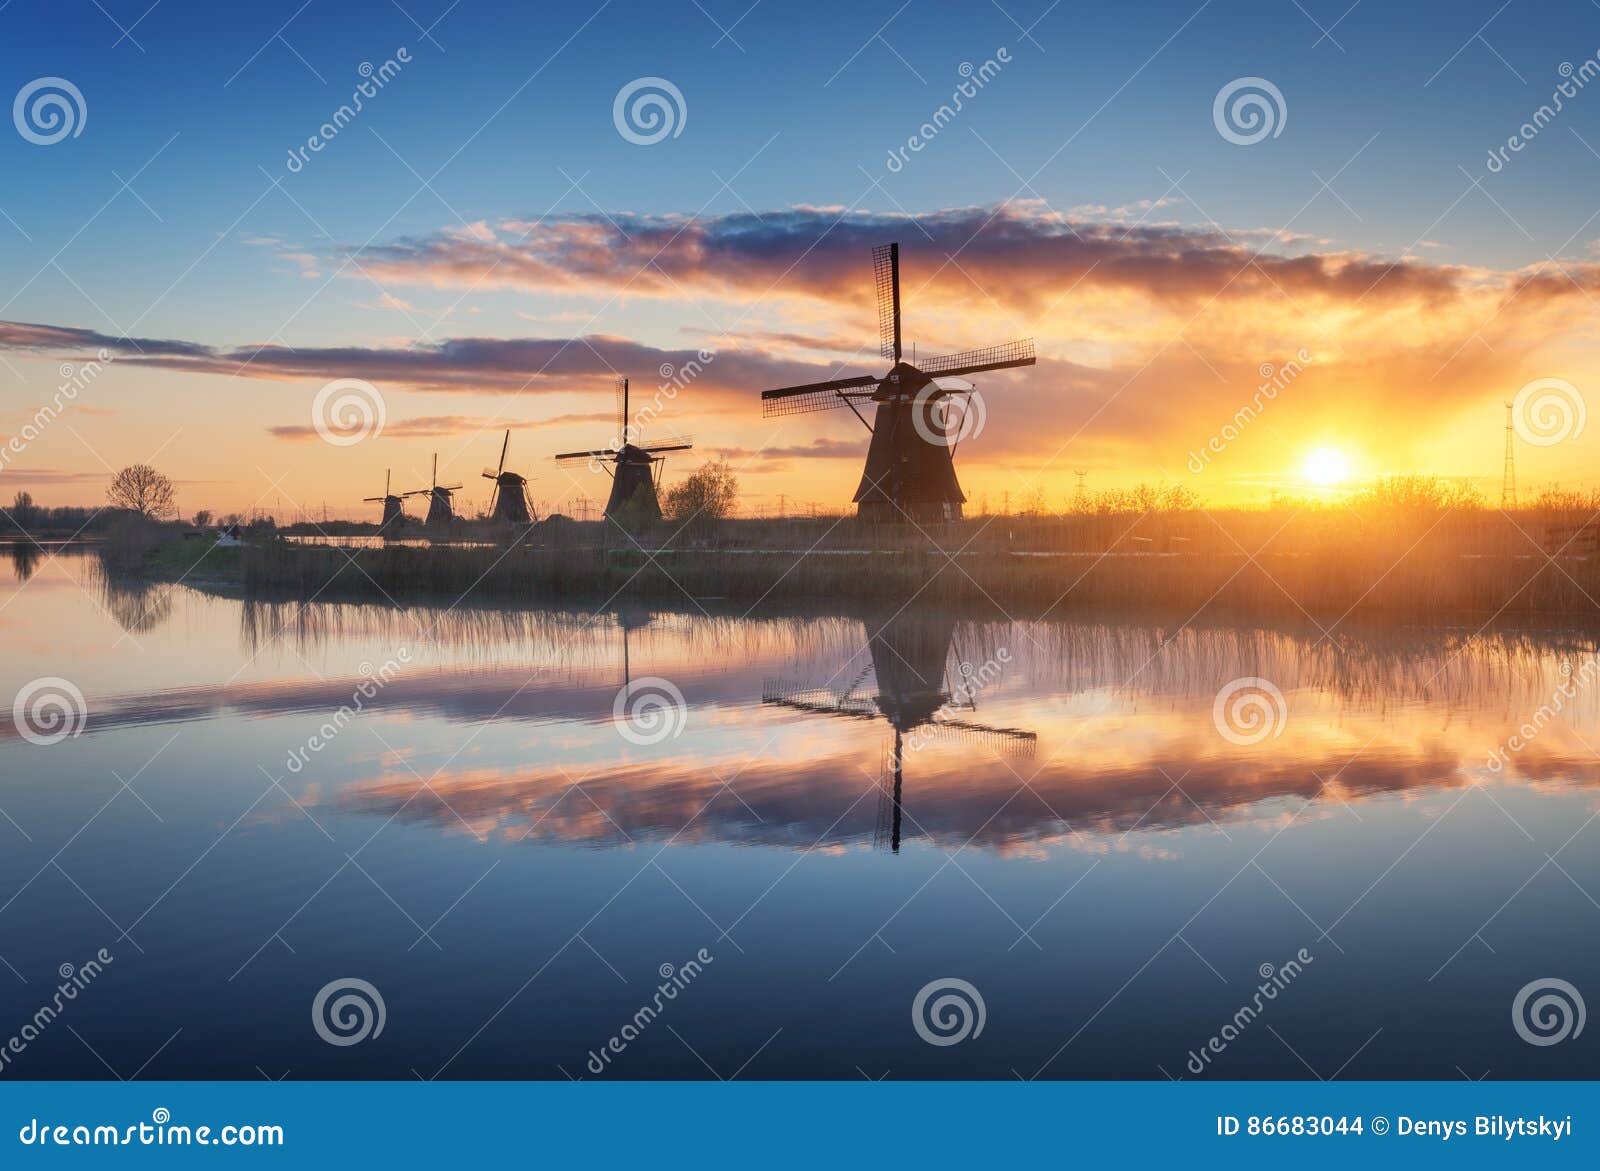 silhouette of windmills at sunrise in kinderdijk, netherlands